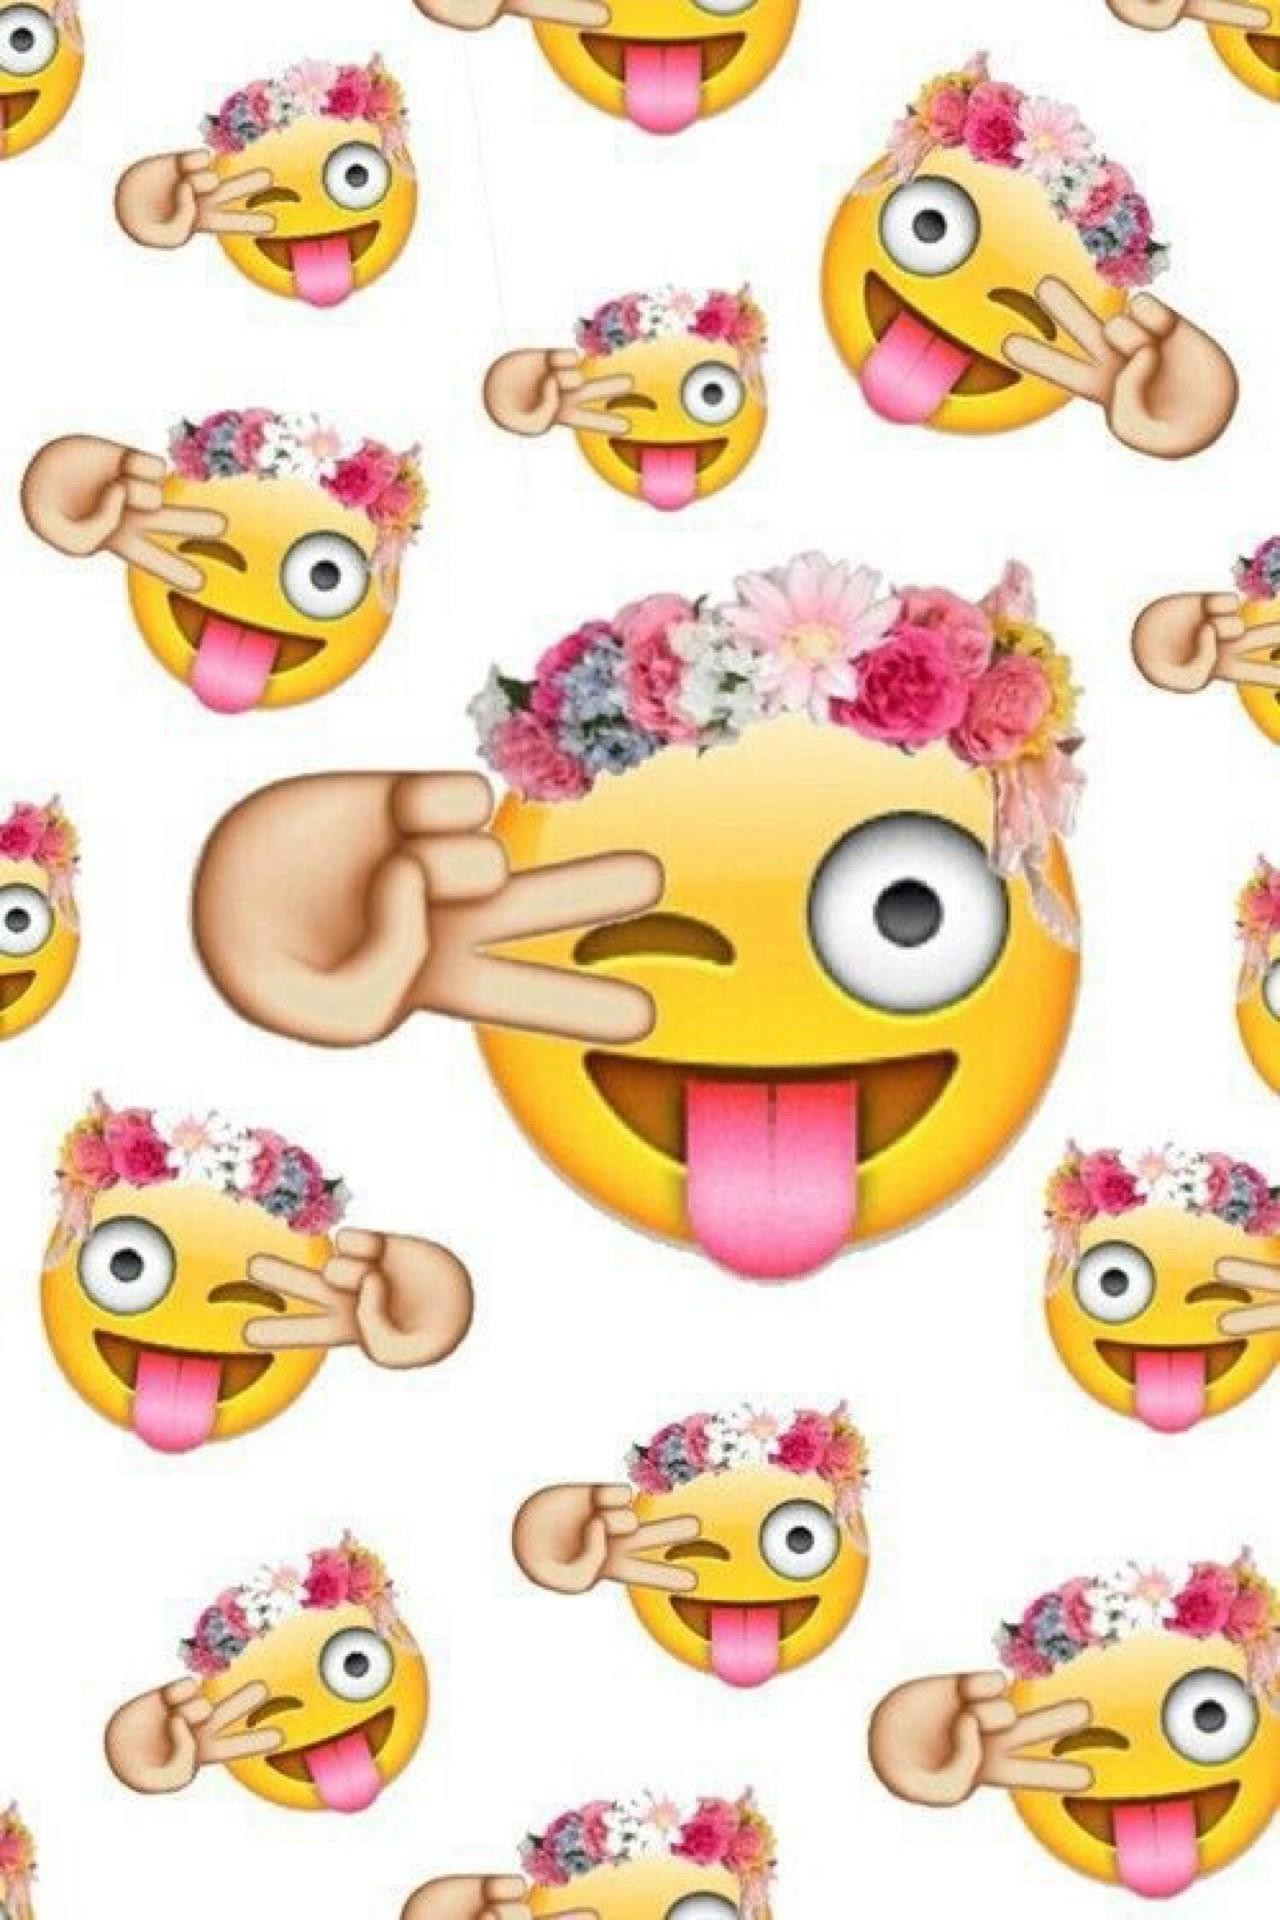 1280x1920 Best 25 Emoji wallpaper ideas on Pinterest Emojis